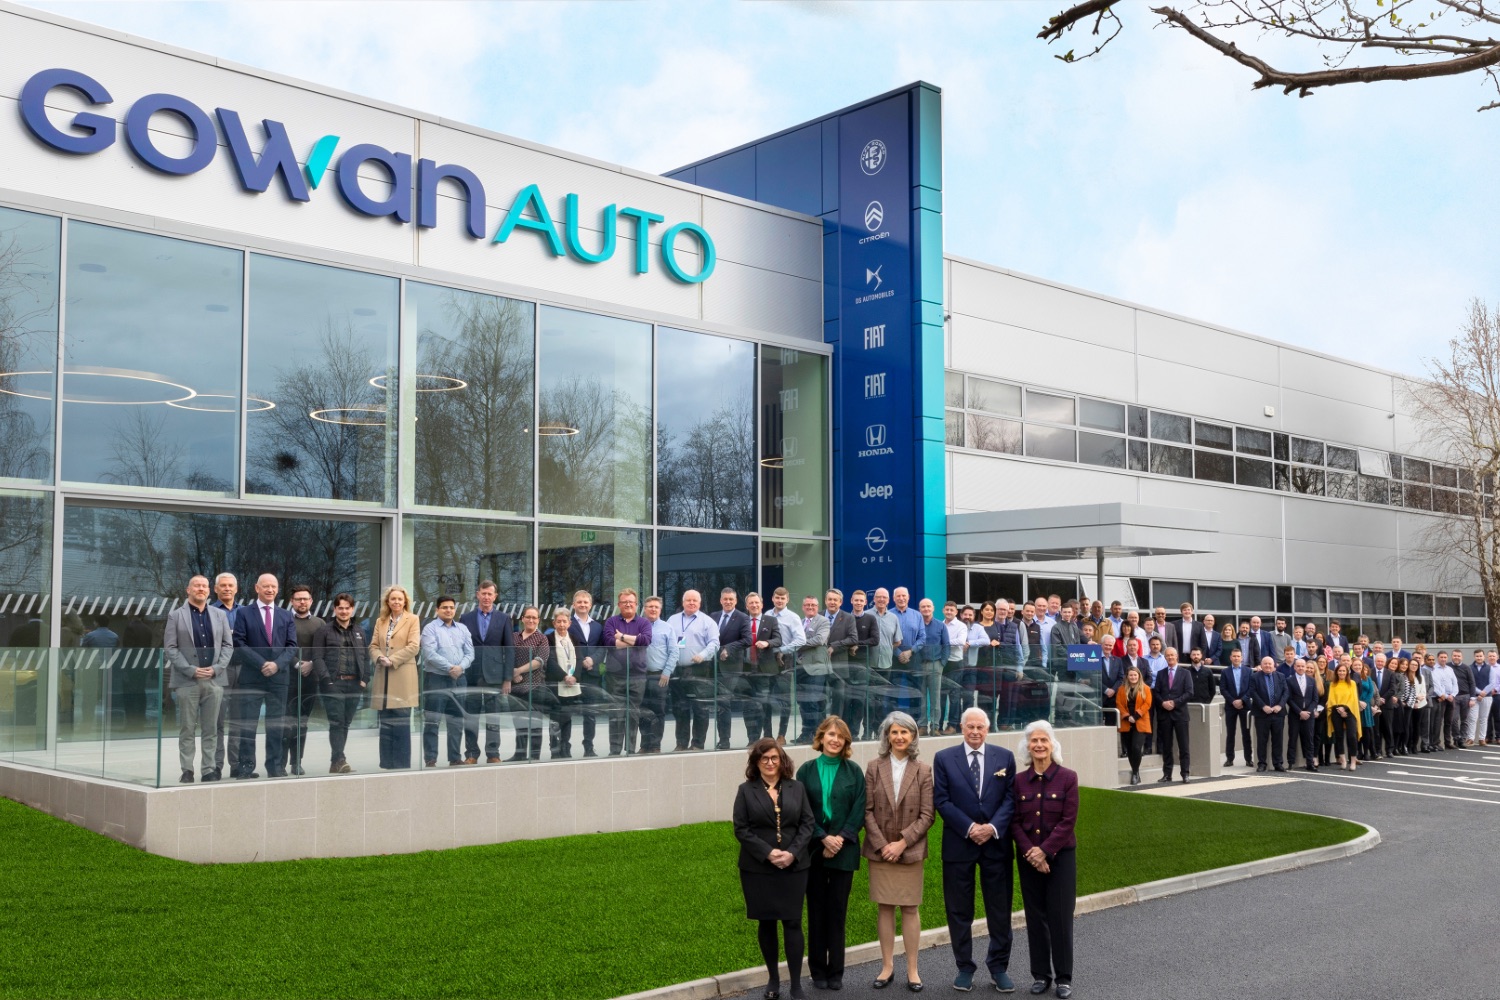 Car Industry News | Gowan Auto inaugurates new HQ in Dublin | CompleteCar.ie